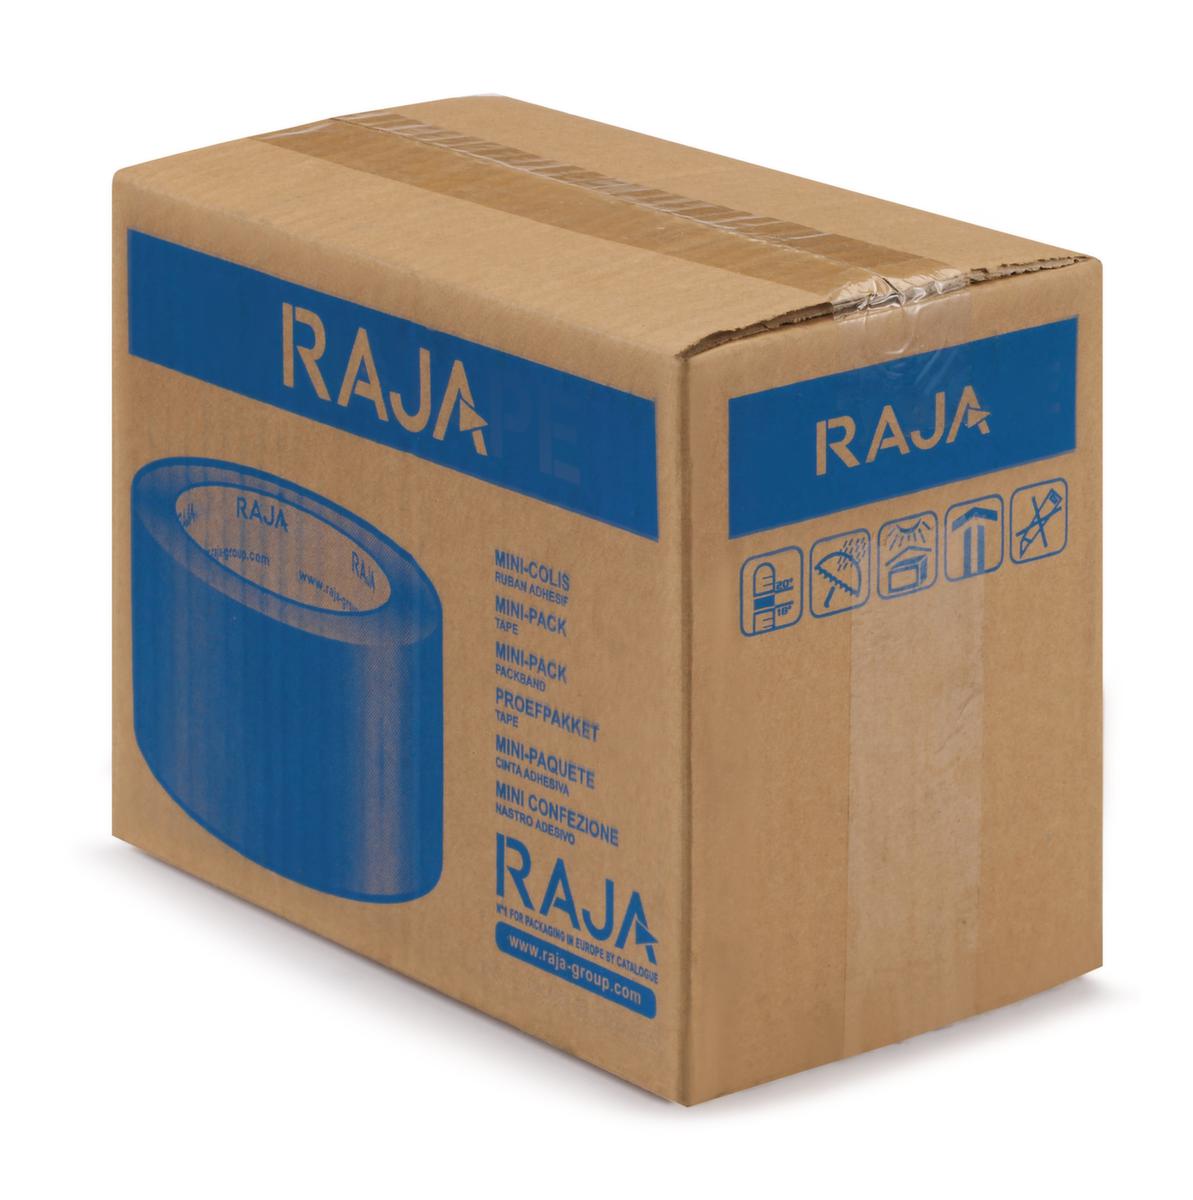 Raja PVC-plakband voor pakketten tot 30 kg, lengte x breedte 66 m x 50 mm  ZOOM